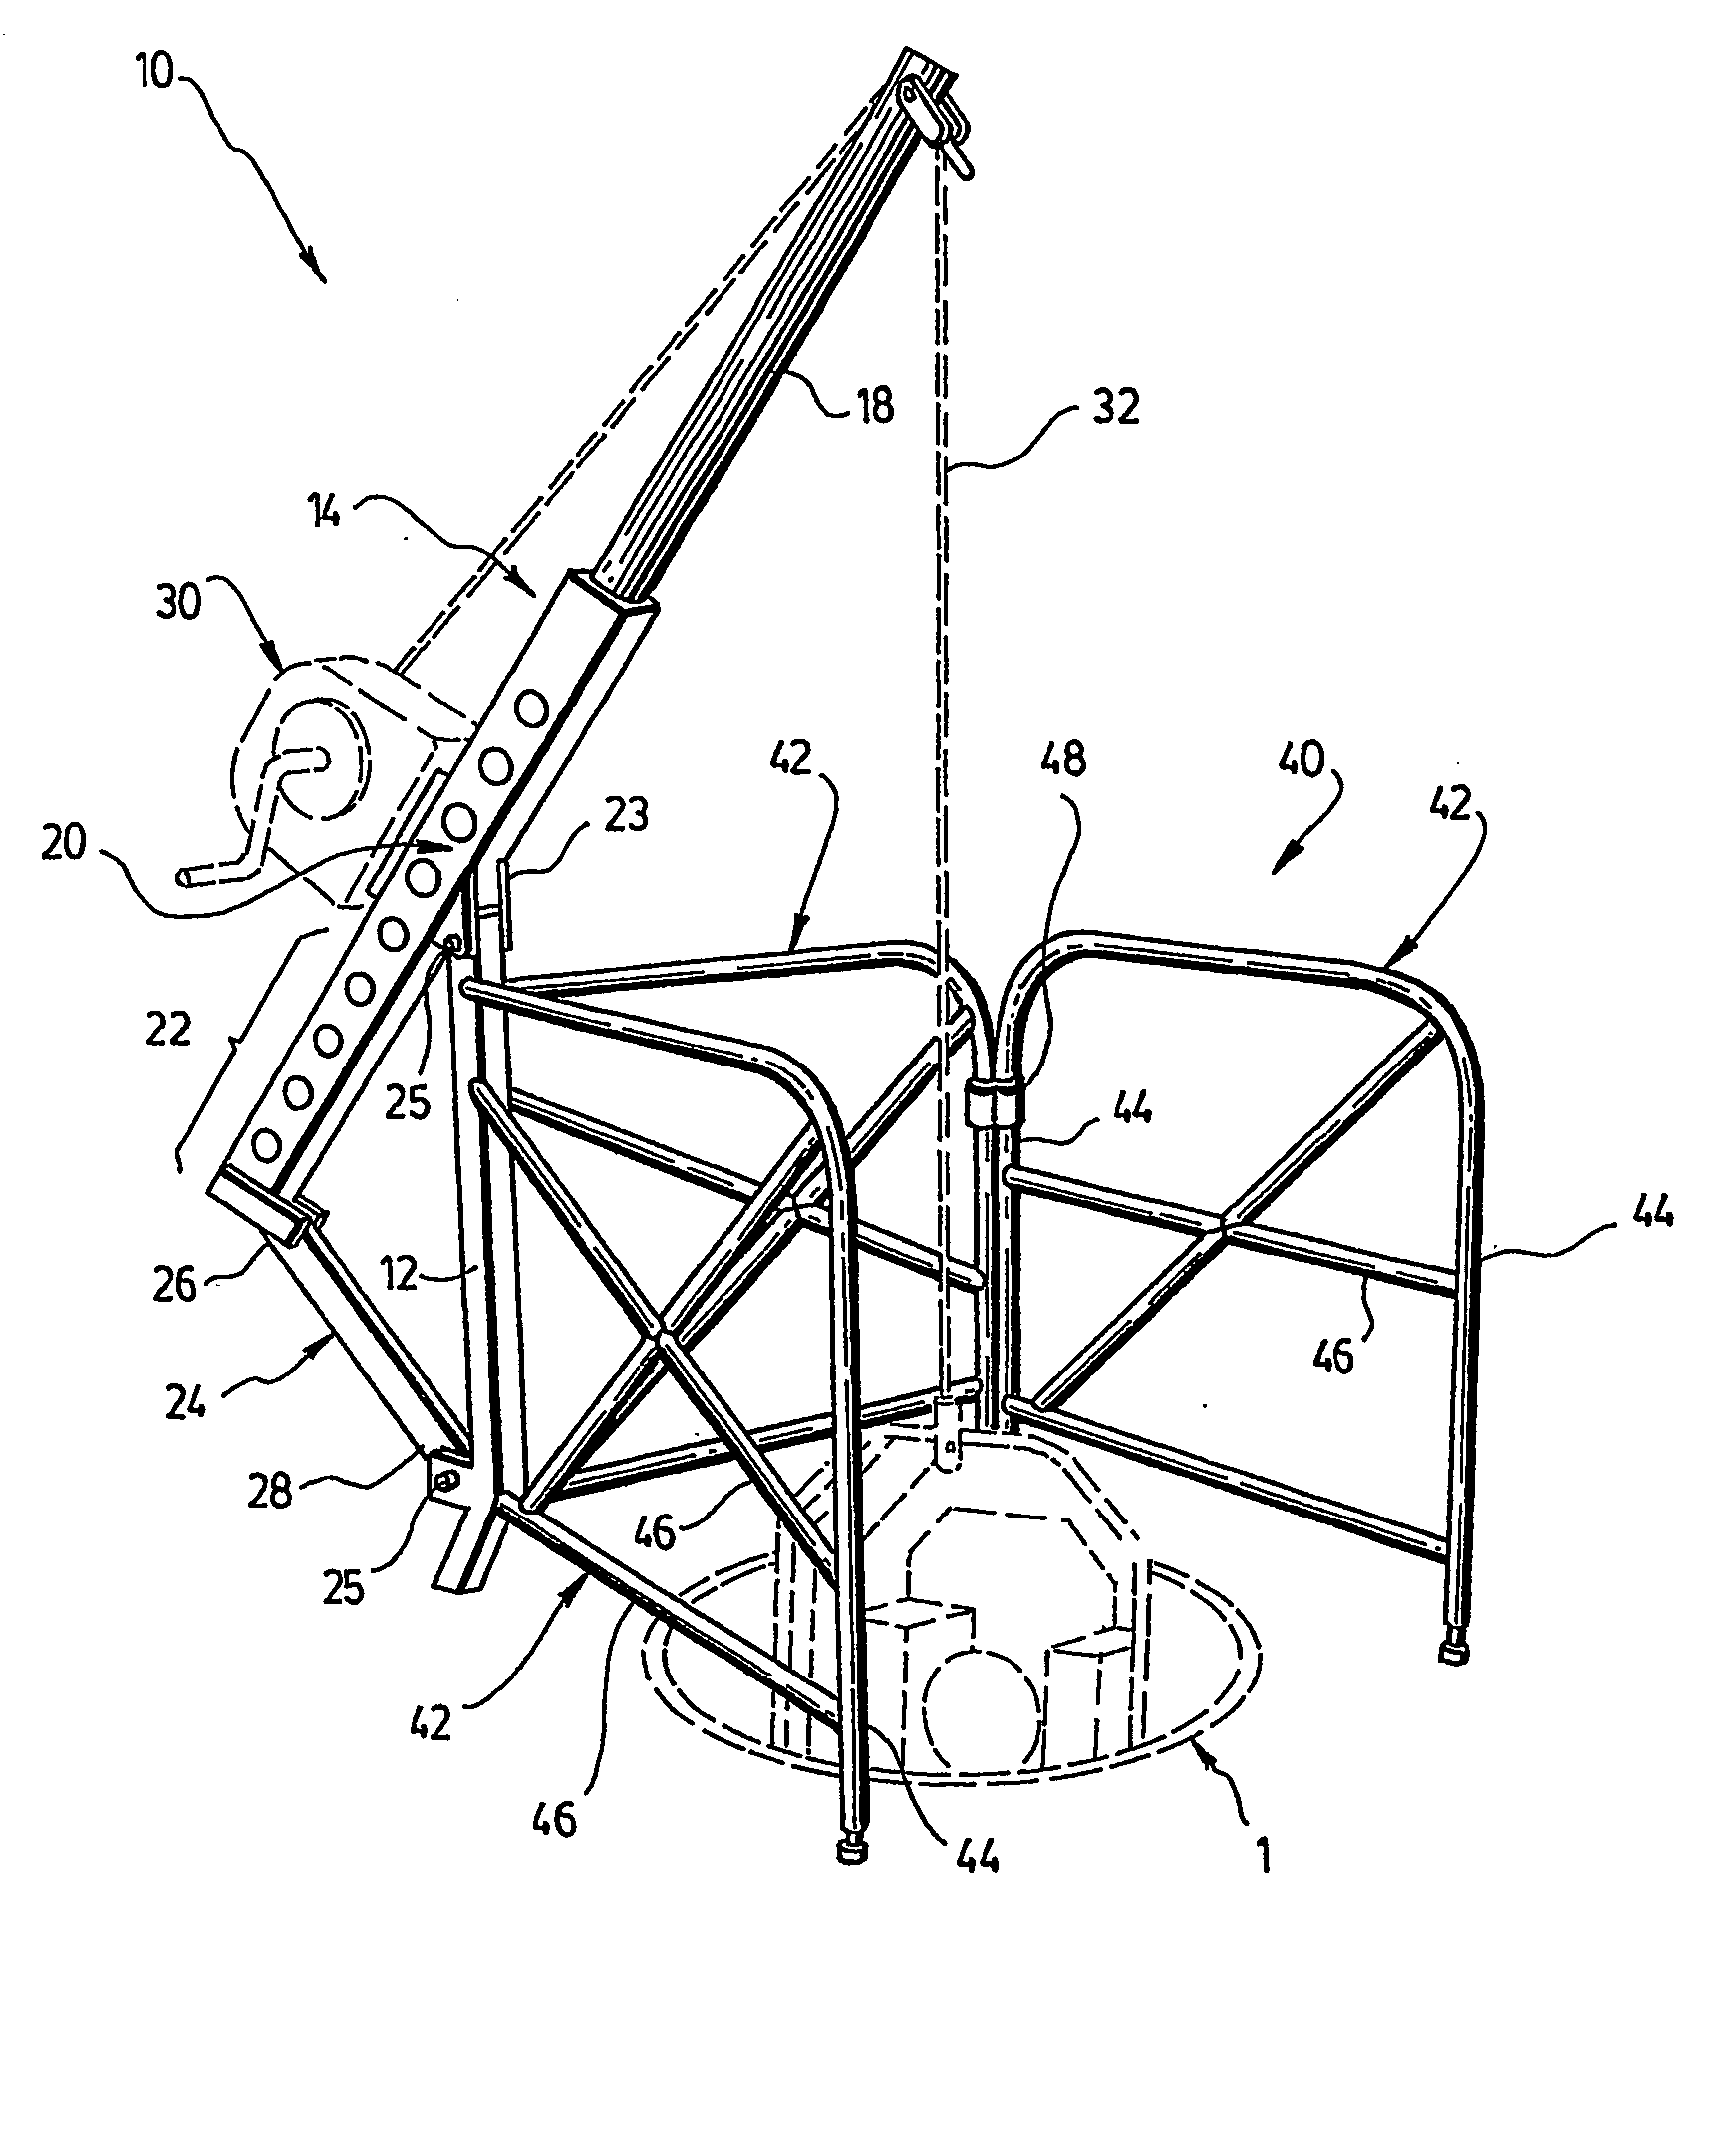 Hoisting apparatus for use at a manhole